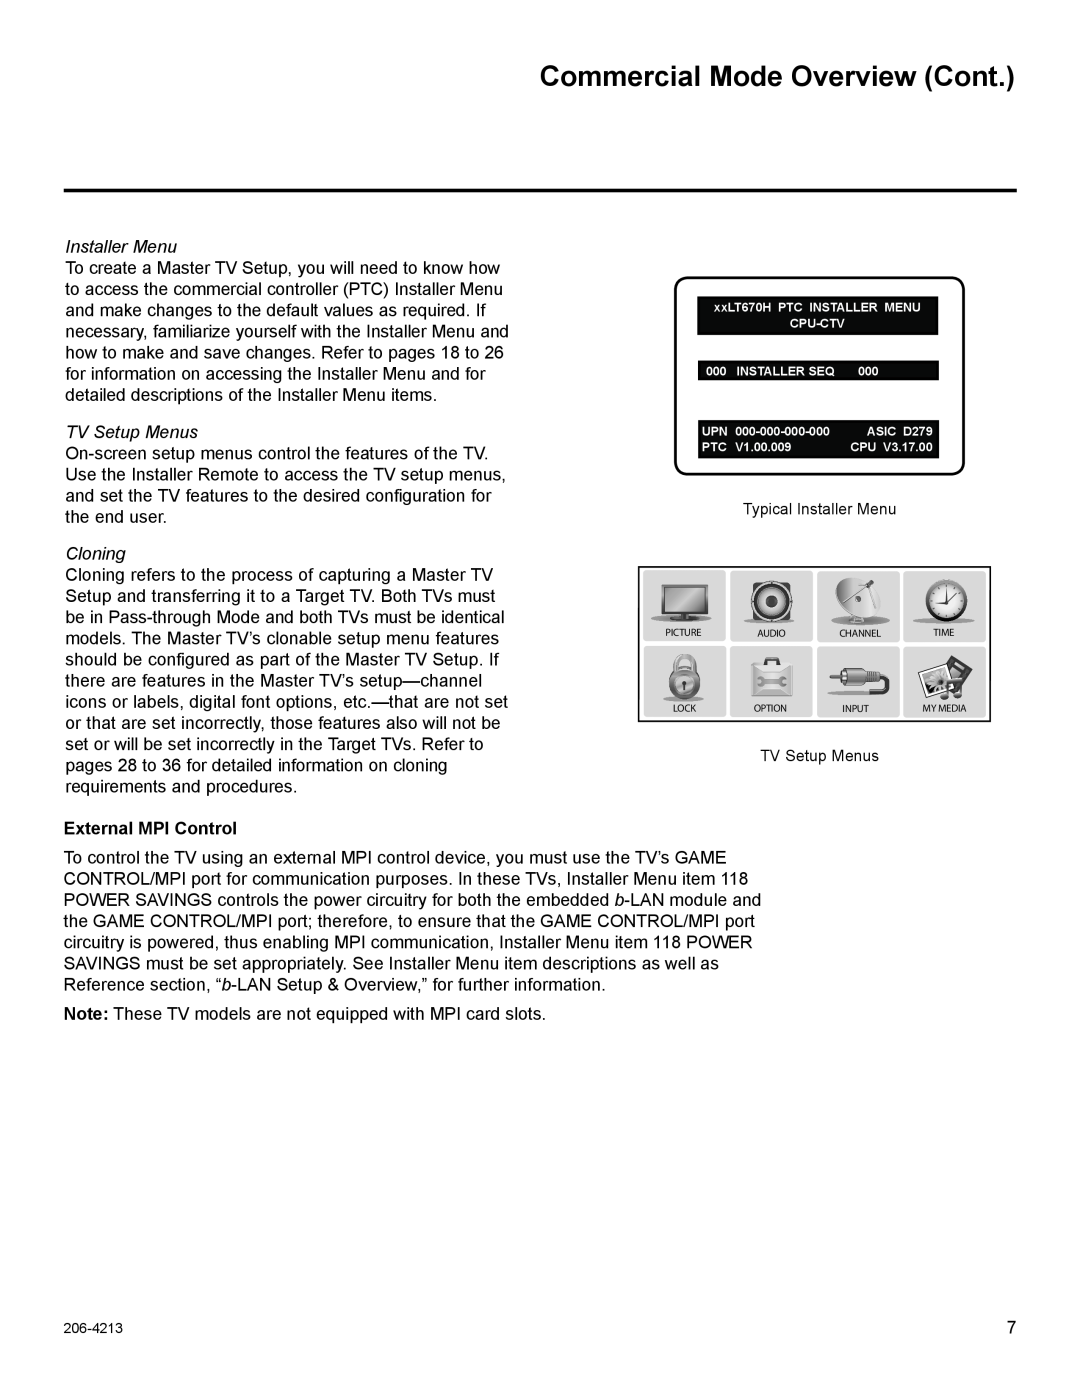 LG Electronics 37LT670H Commercial Mode Overview Cont, External MPI Control, Installer Menu, TV Setup Menus, Cloning 